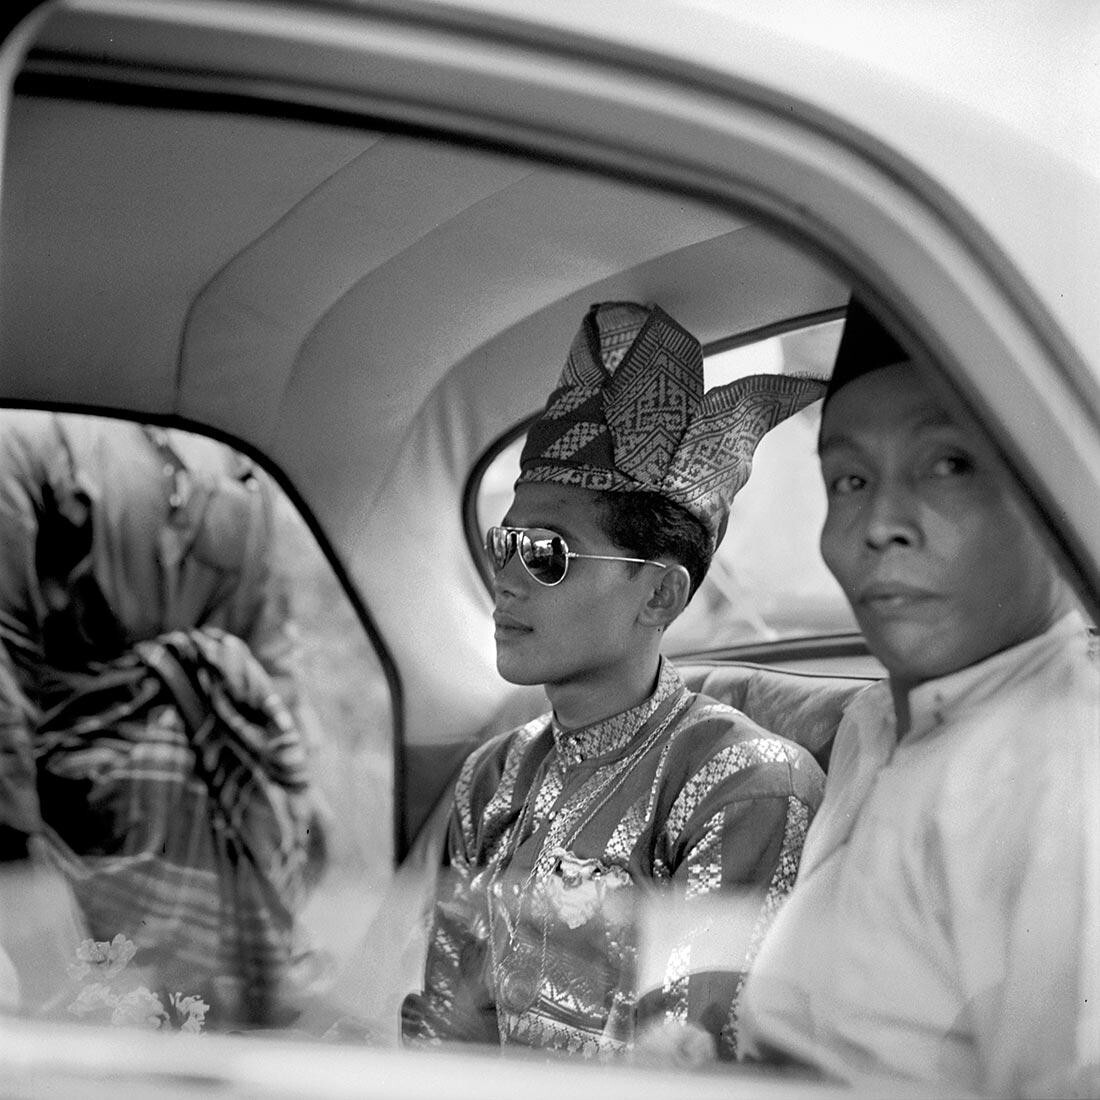 27 июня 1959 год, Азия. Фотограф Вивиан Майер